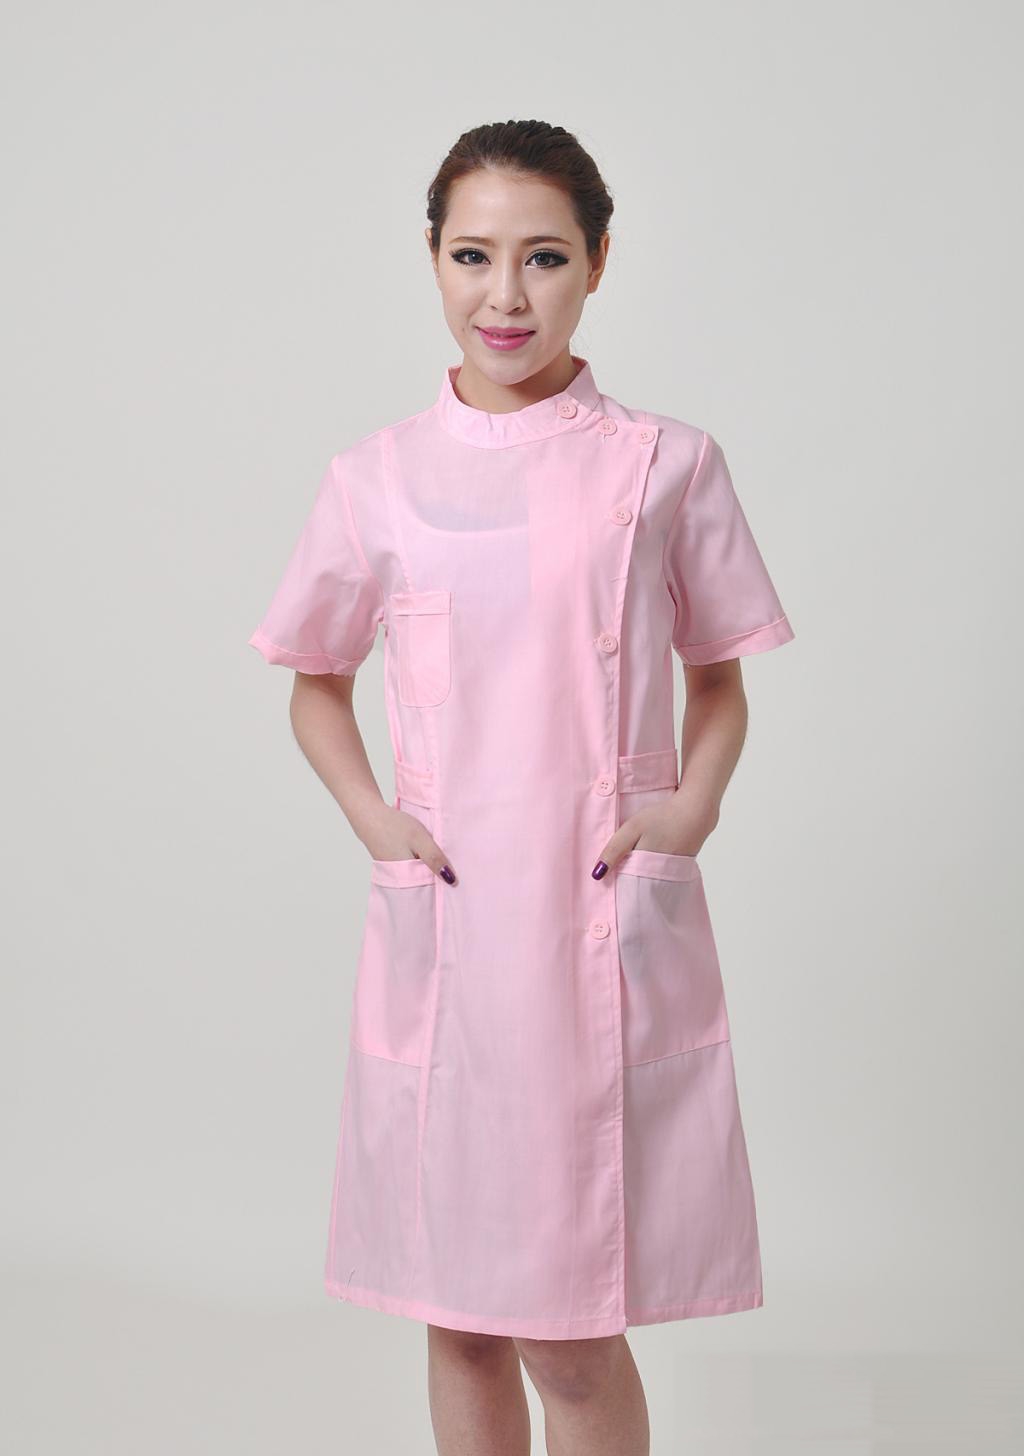 short sleeve pink nurse uniform coat